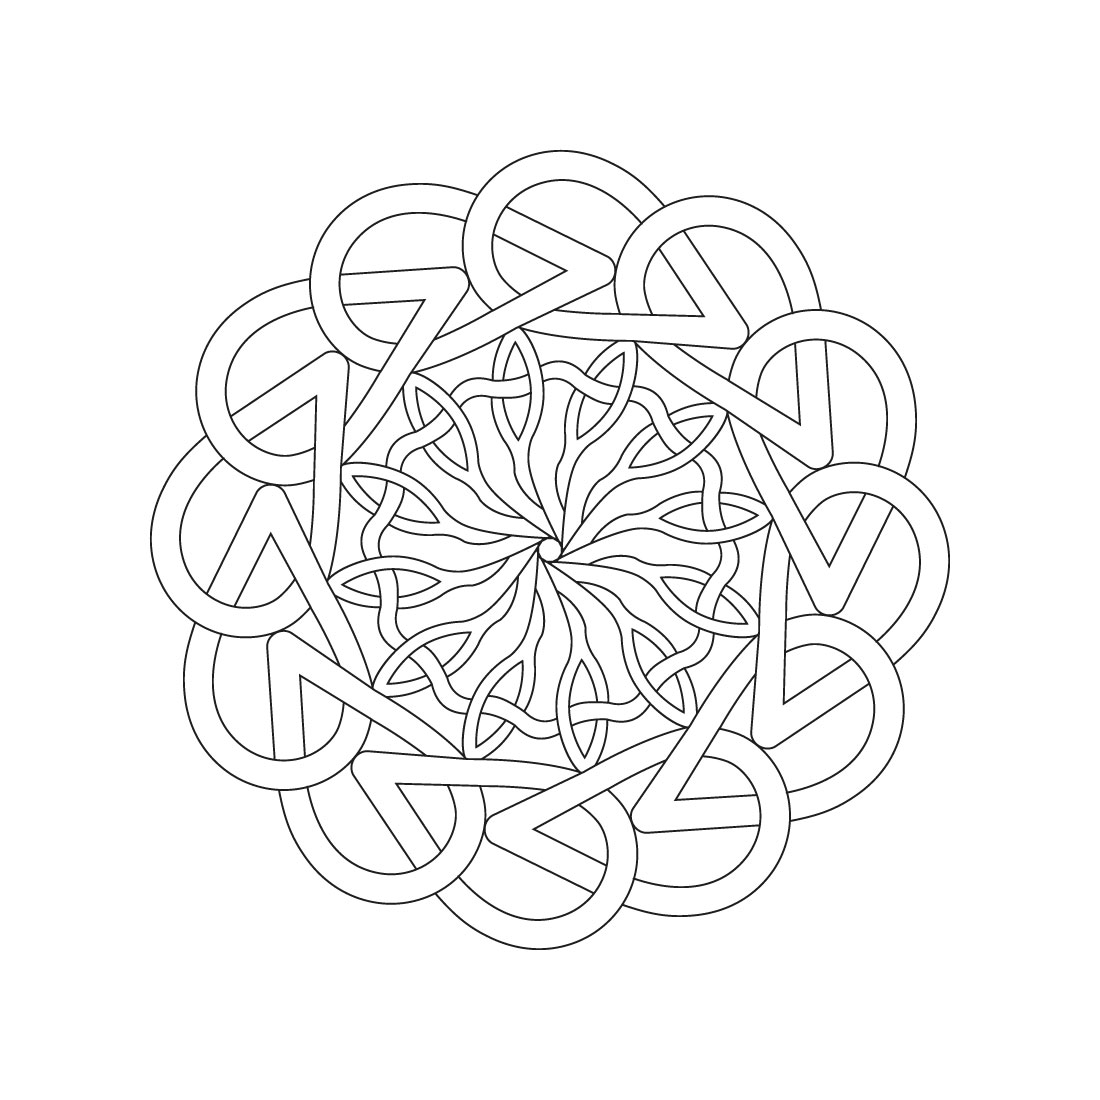 bundle of 10 celtic knot mandala coloring book pages 03 743